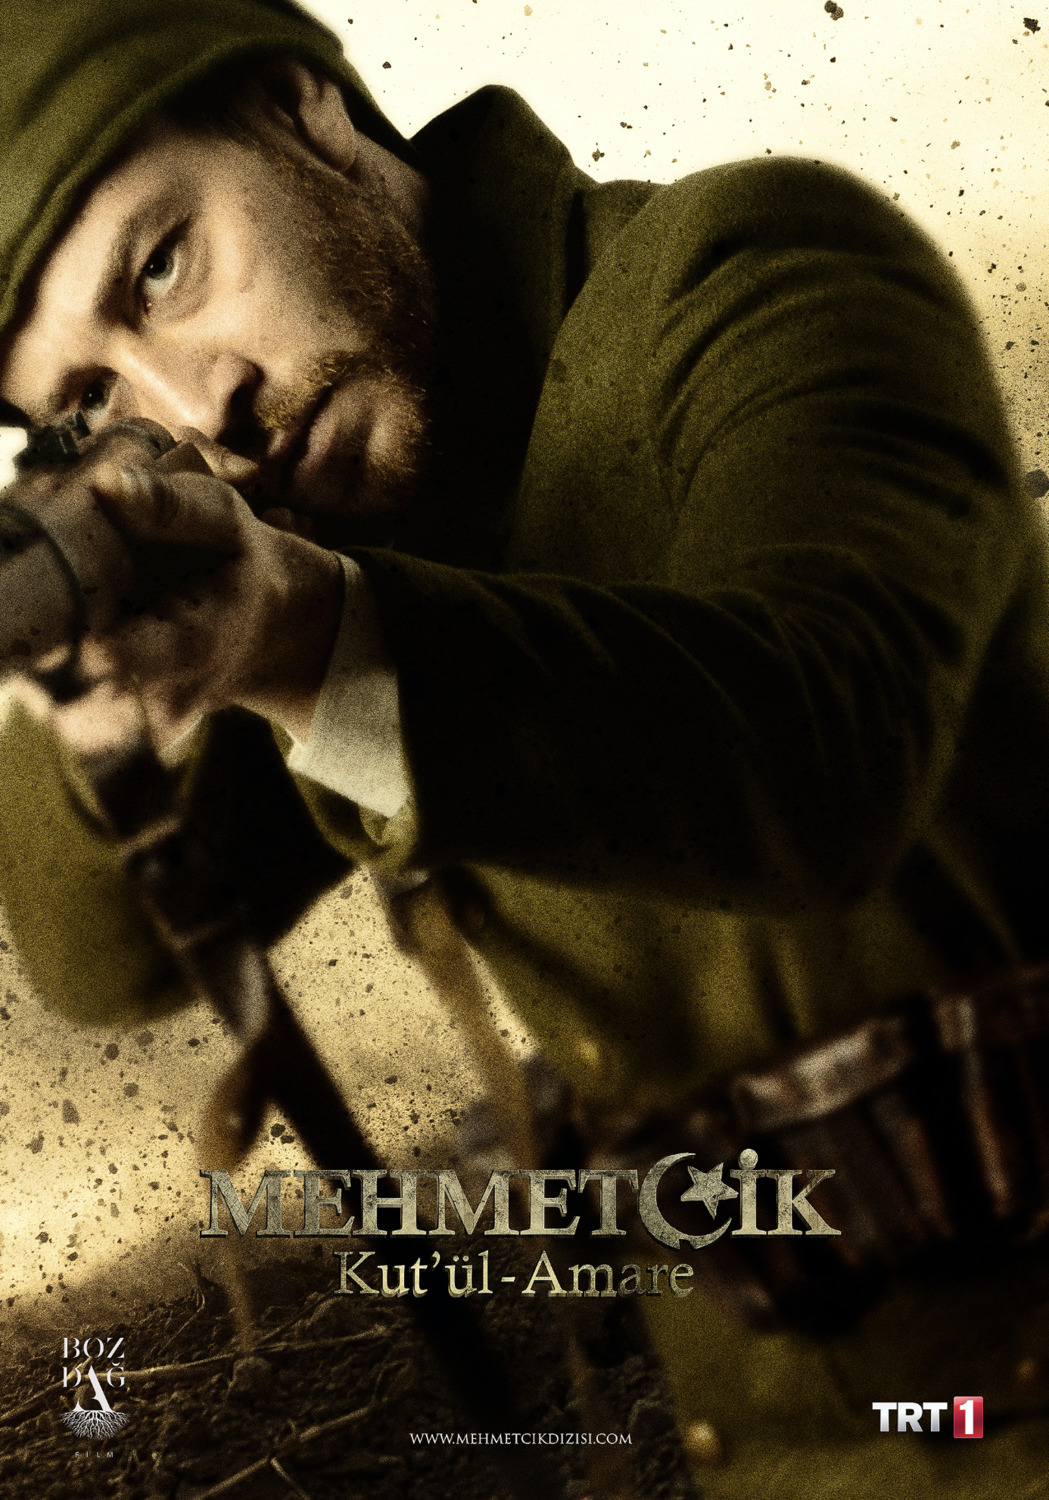 Extra Large TV Poster Image for Mehmetçik Kut'ül Amare (#38 of 41)